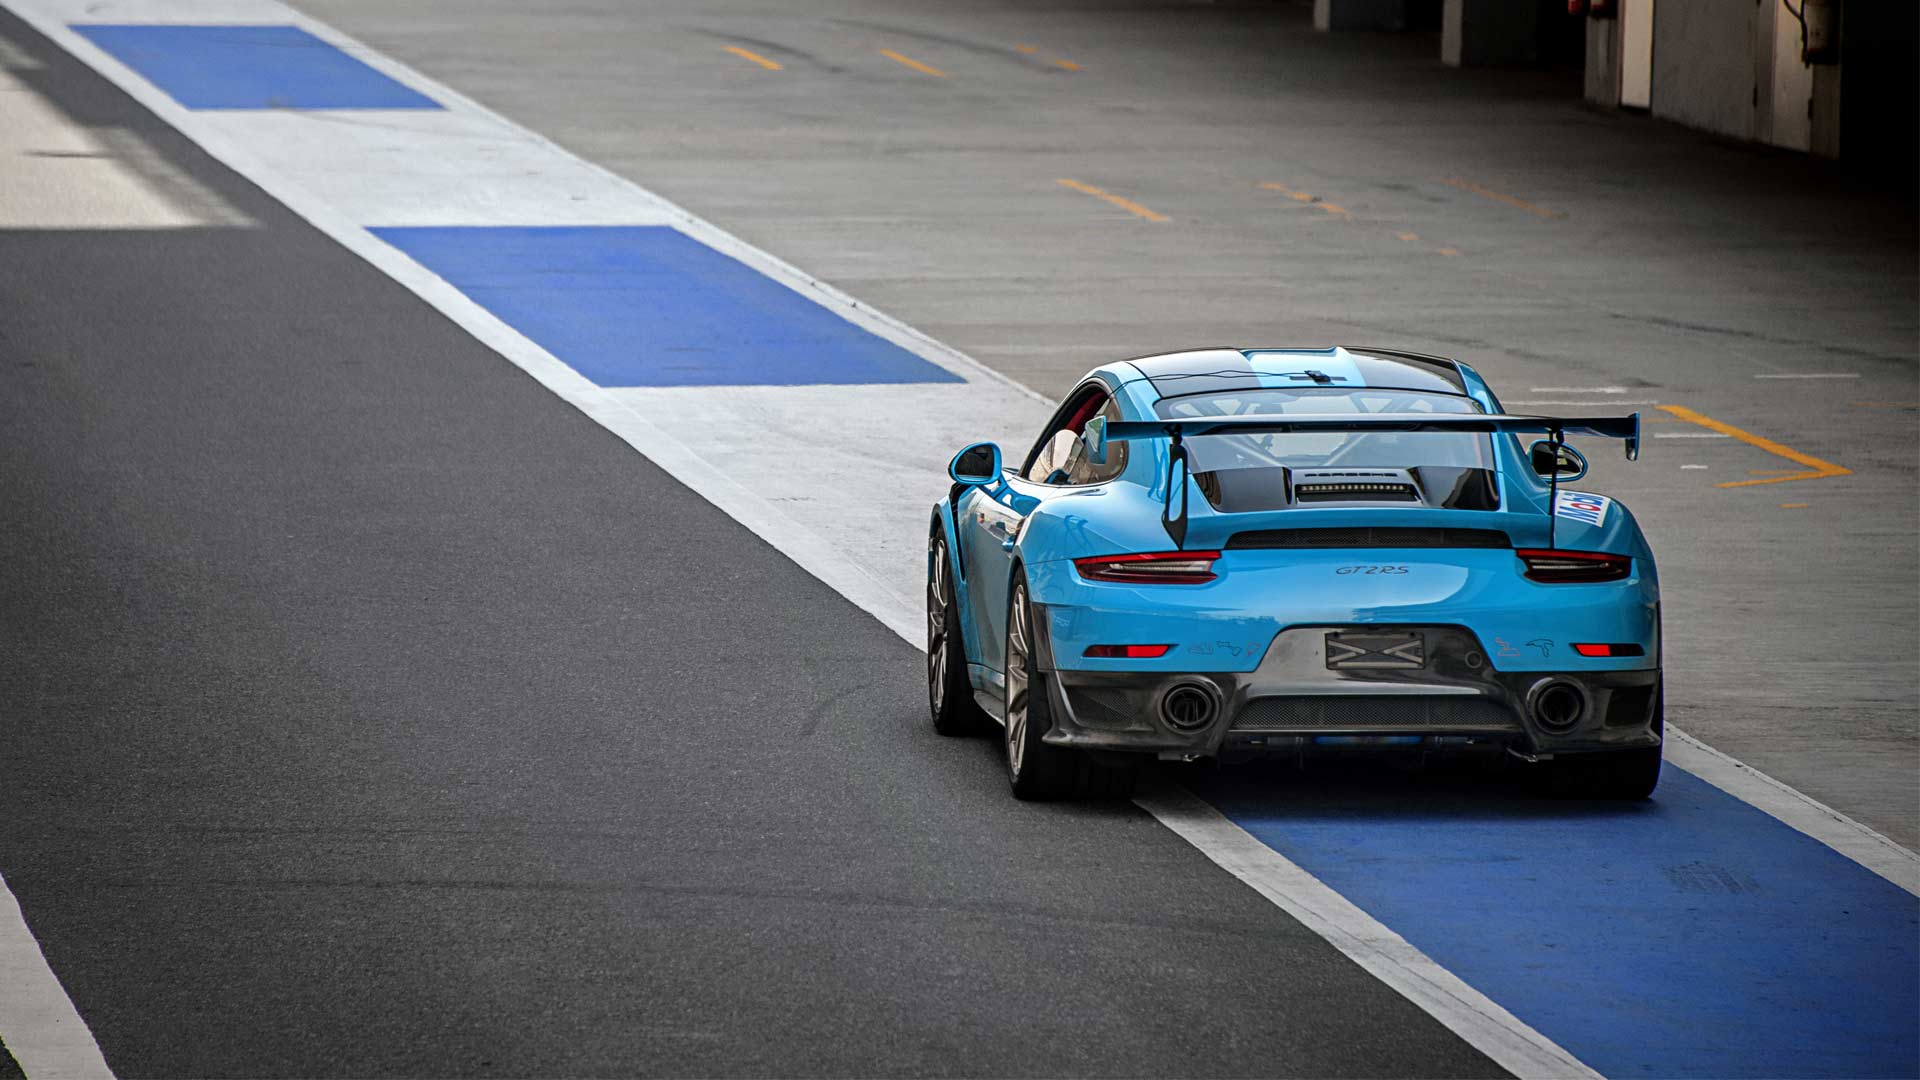 Porsche-911-GT2-RS-Buddh-International-Circuit-lap-record_3